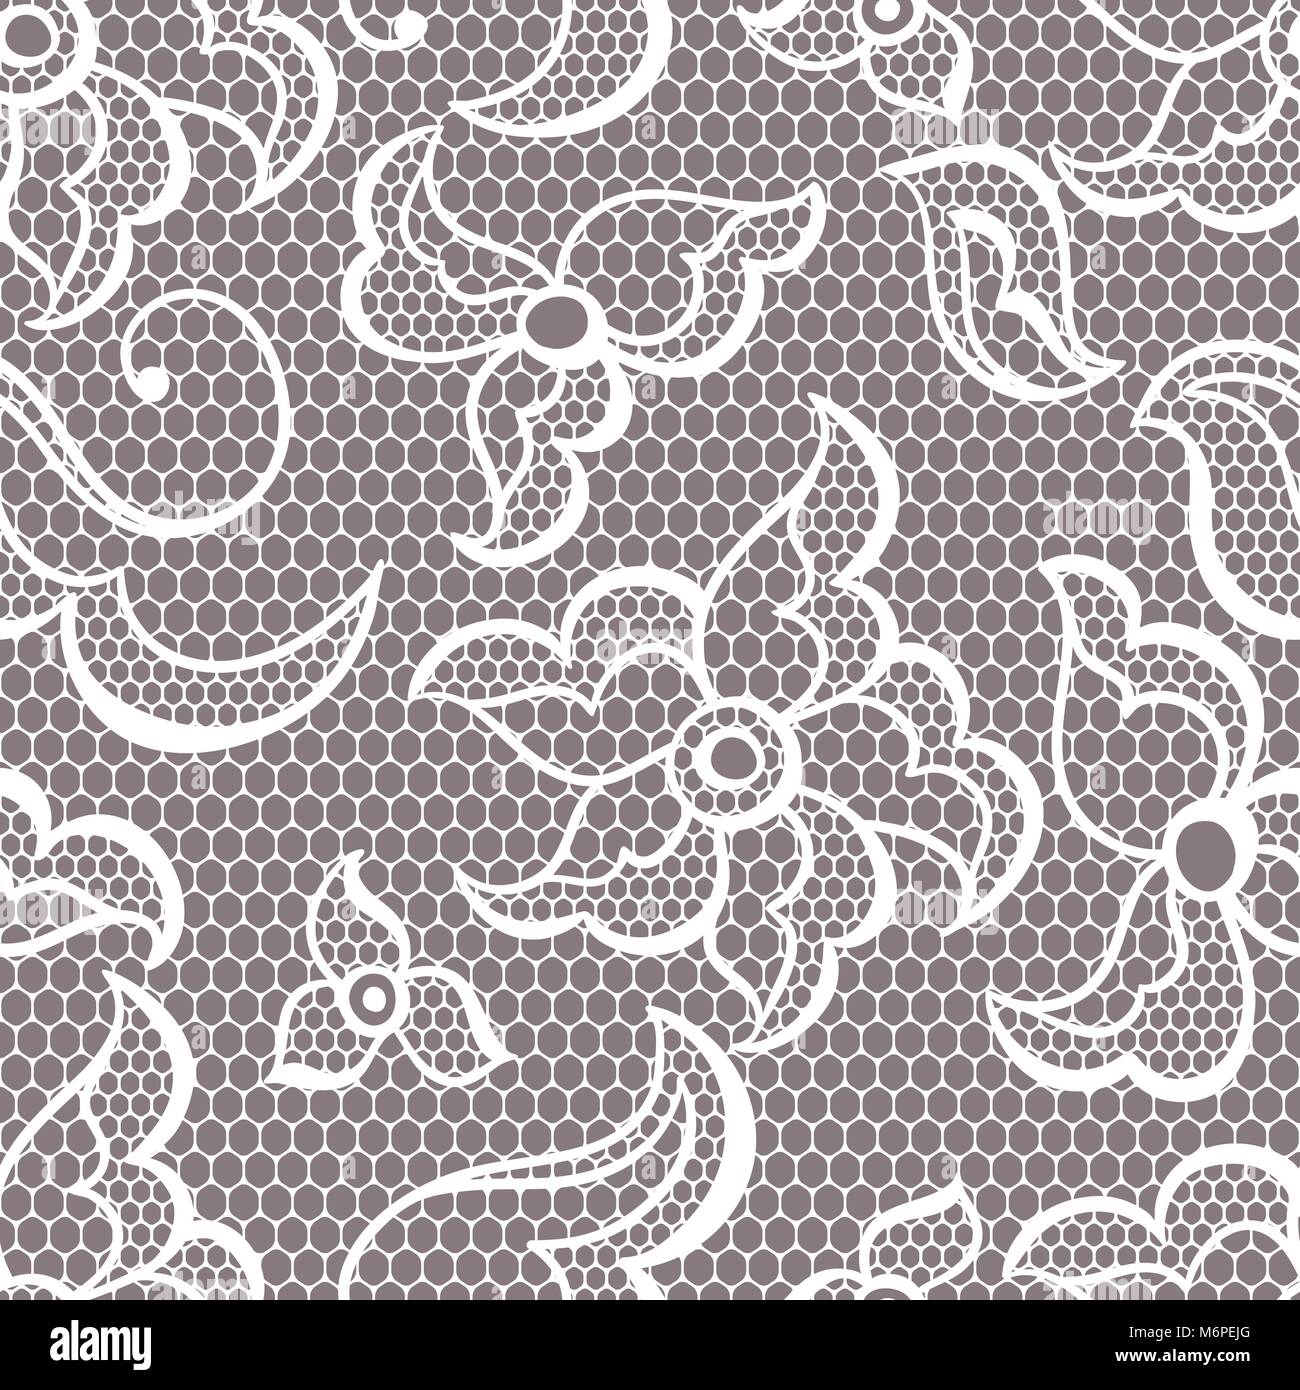 https://c8.alamy.com/comp/M6PEJG/lace-fabric-seamless-pattern-with-abstract-flowers-M6PEJG.jpg